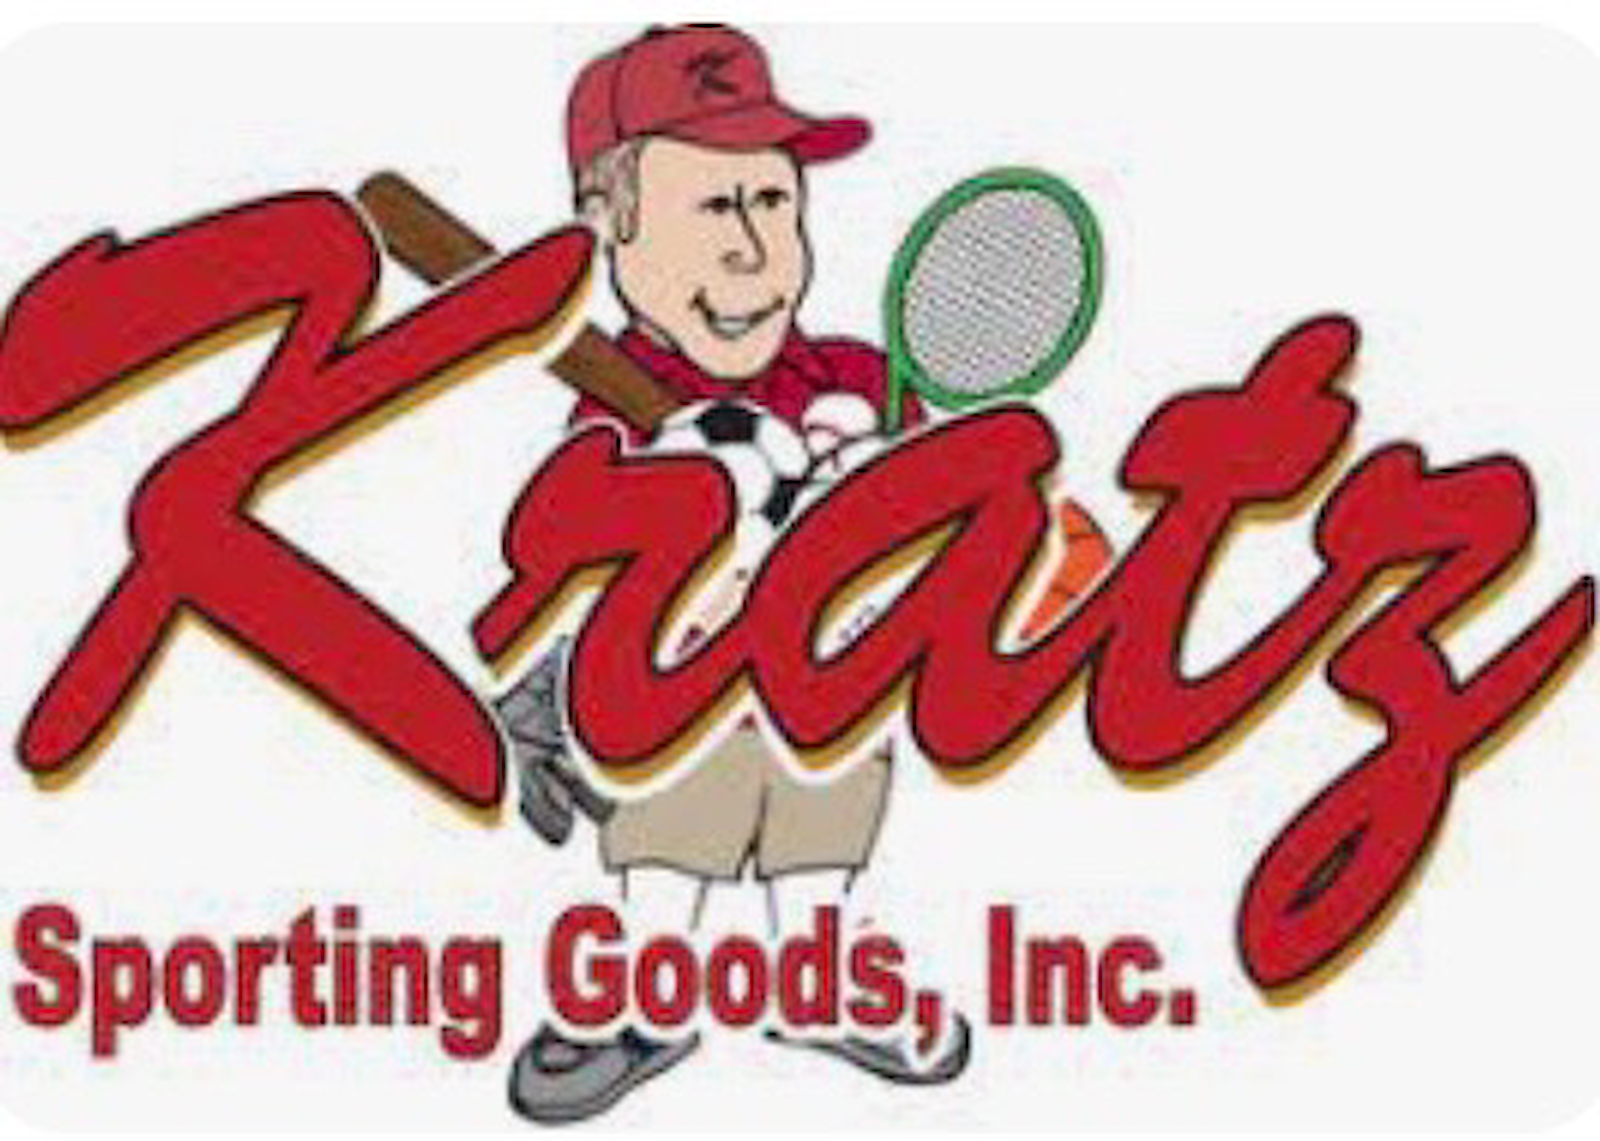 Kratz Sporting Goods, Inc.